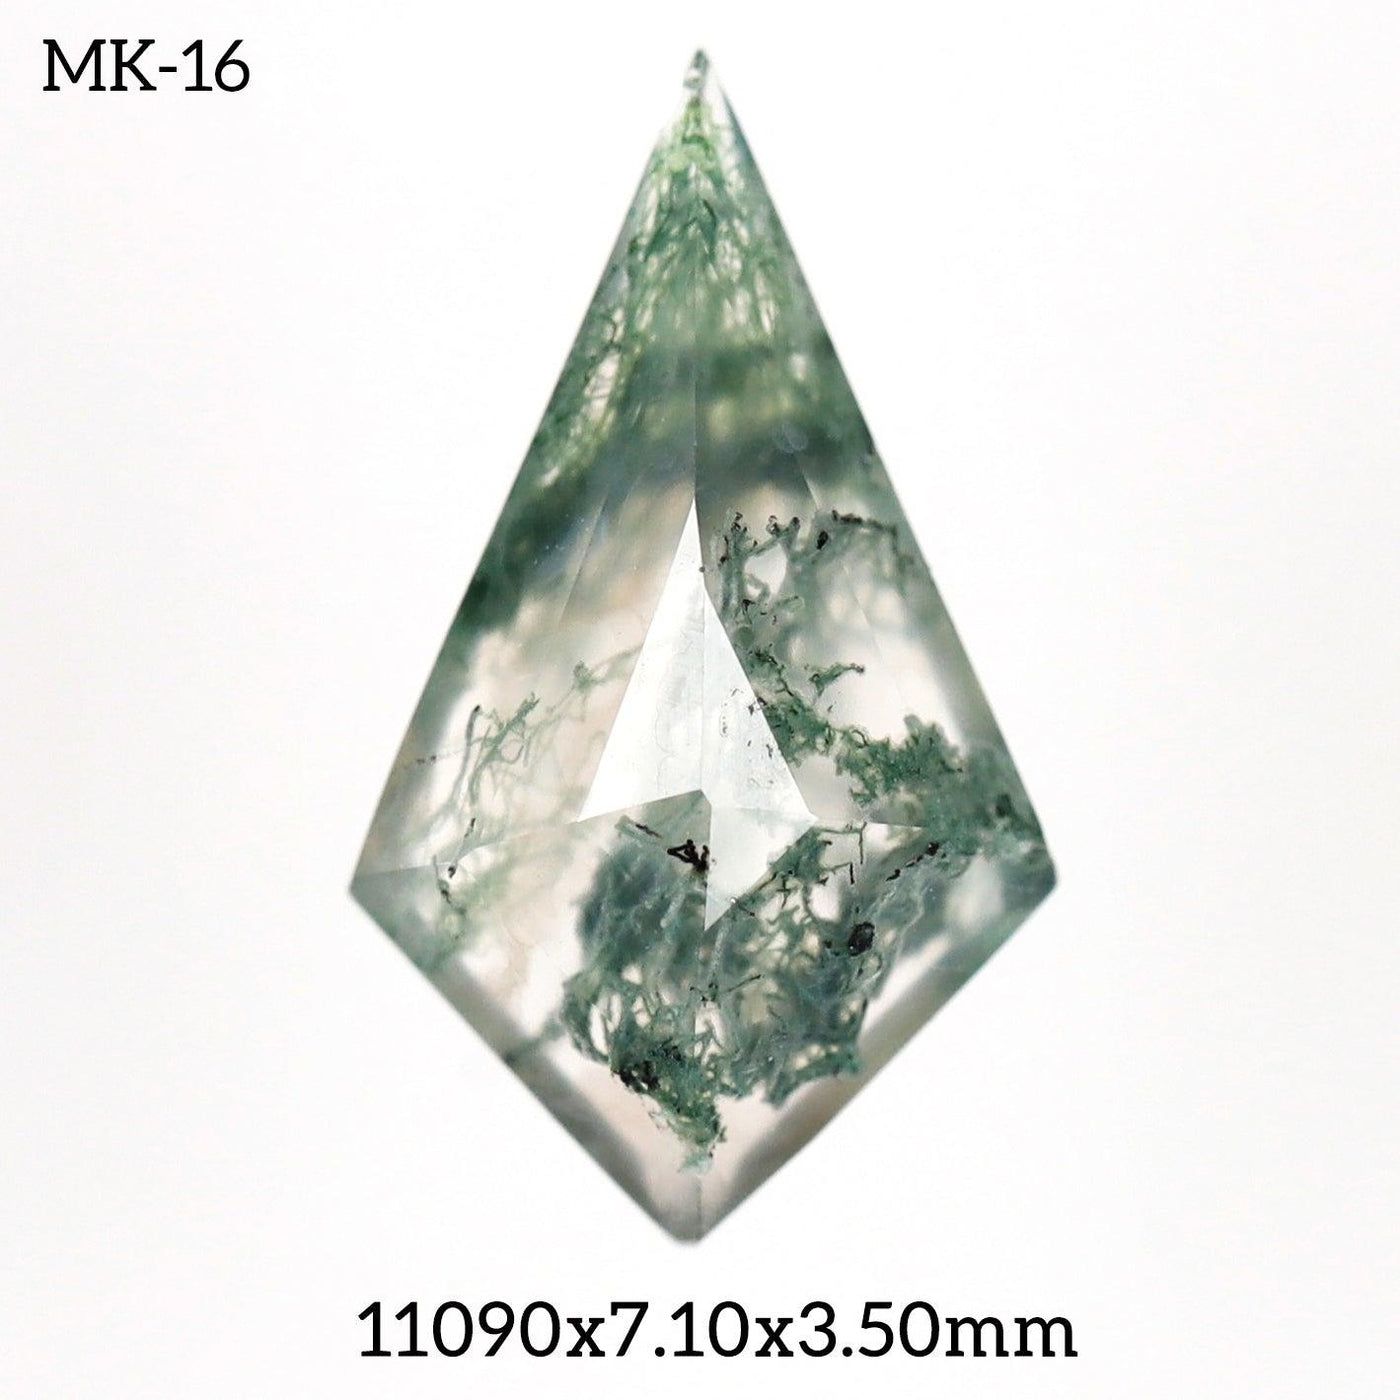 MK - 16 Moss Agate Kite Gemstone - Rubysta